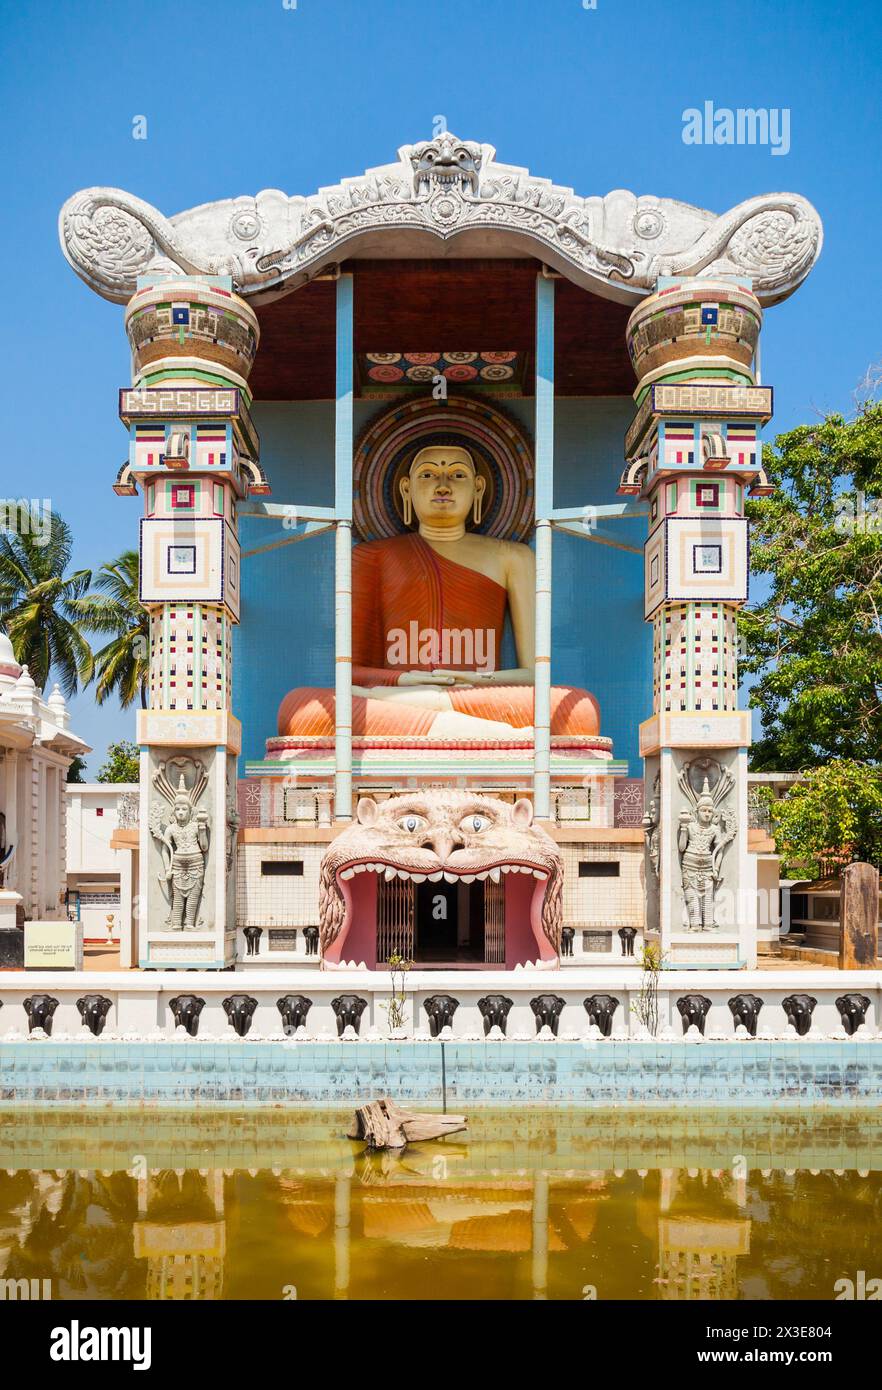 Angurukaramulla Temple is a buddhist temple in Negombo. Negombo is a major city on the west coast of Sri Lanka. Stock Photo